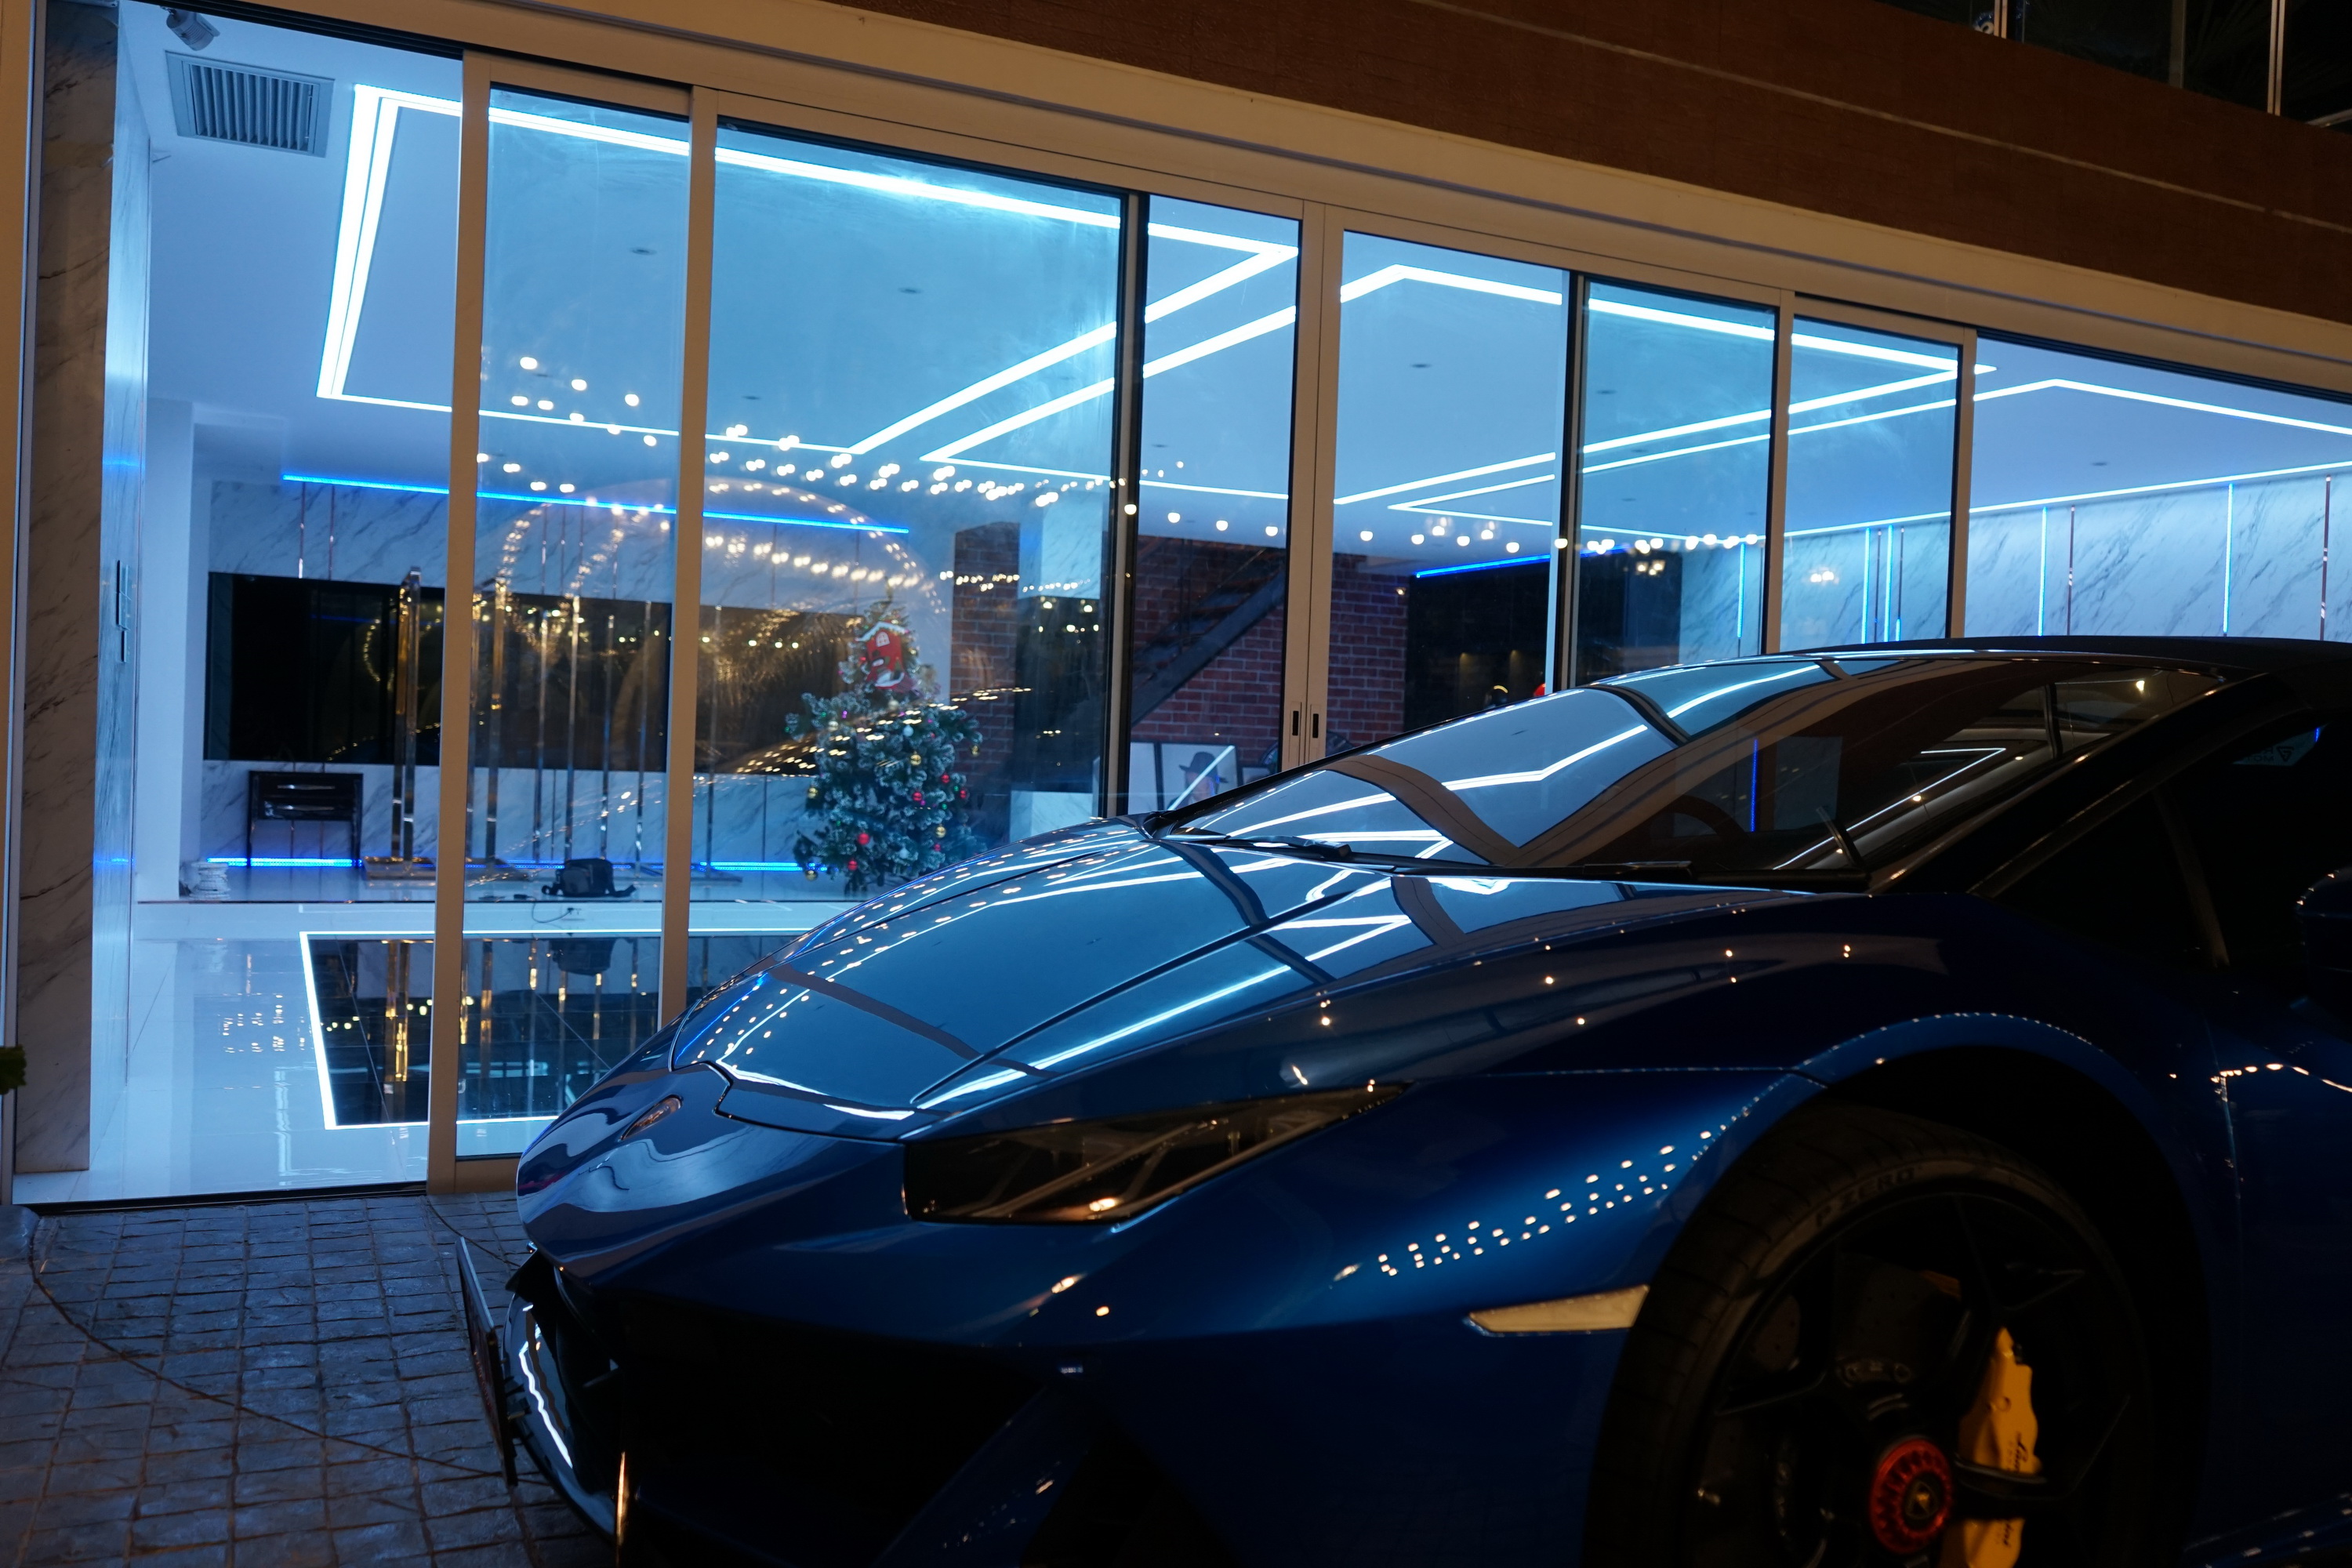 Lamborghini garage